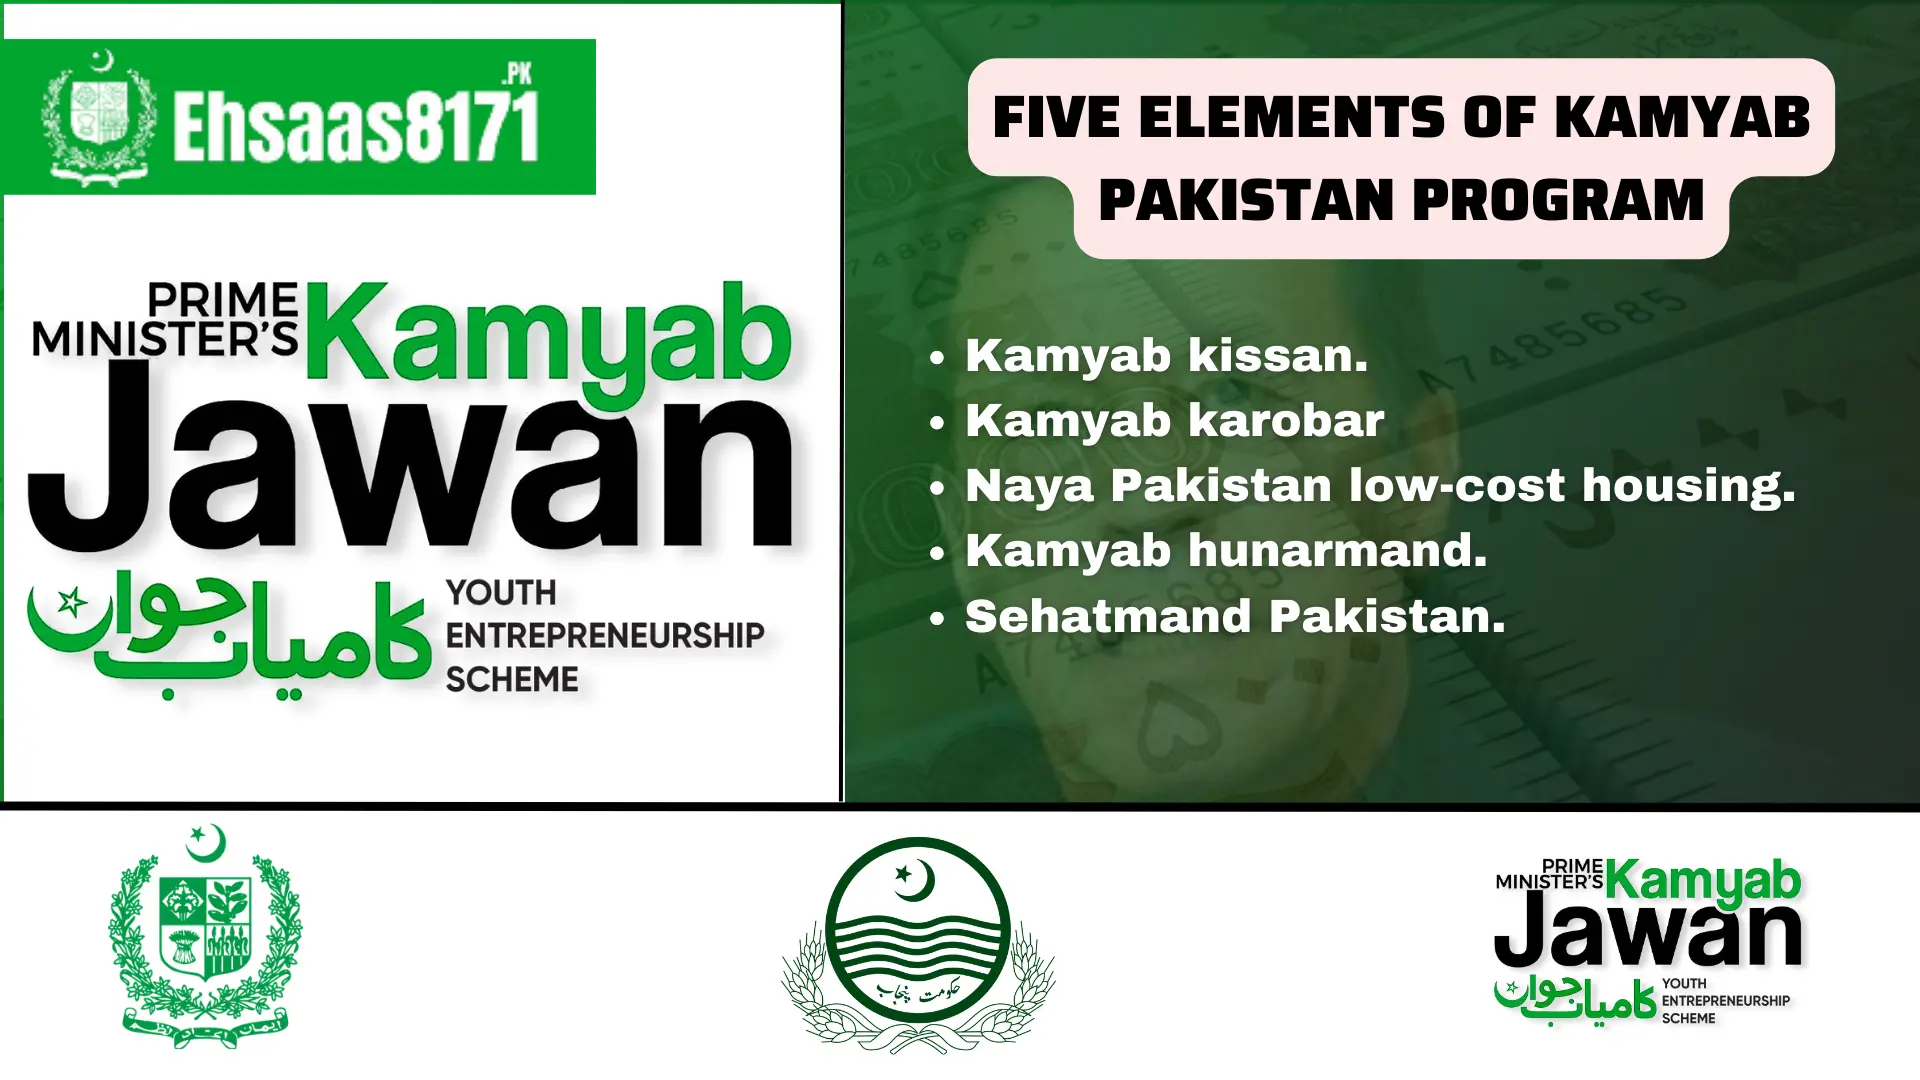 Five elements of Kamyab Pakistan program